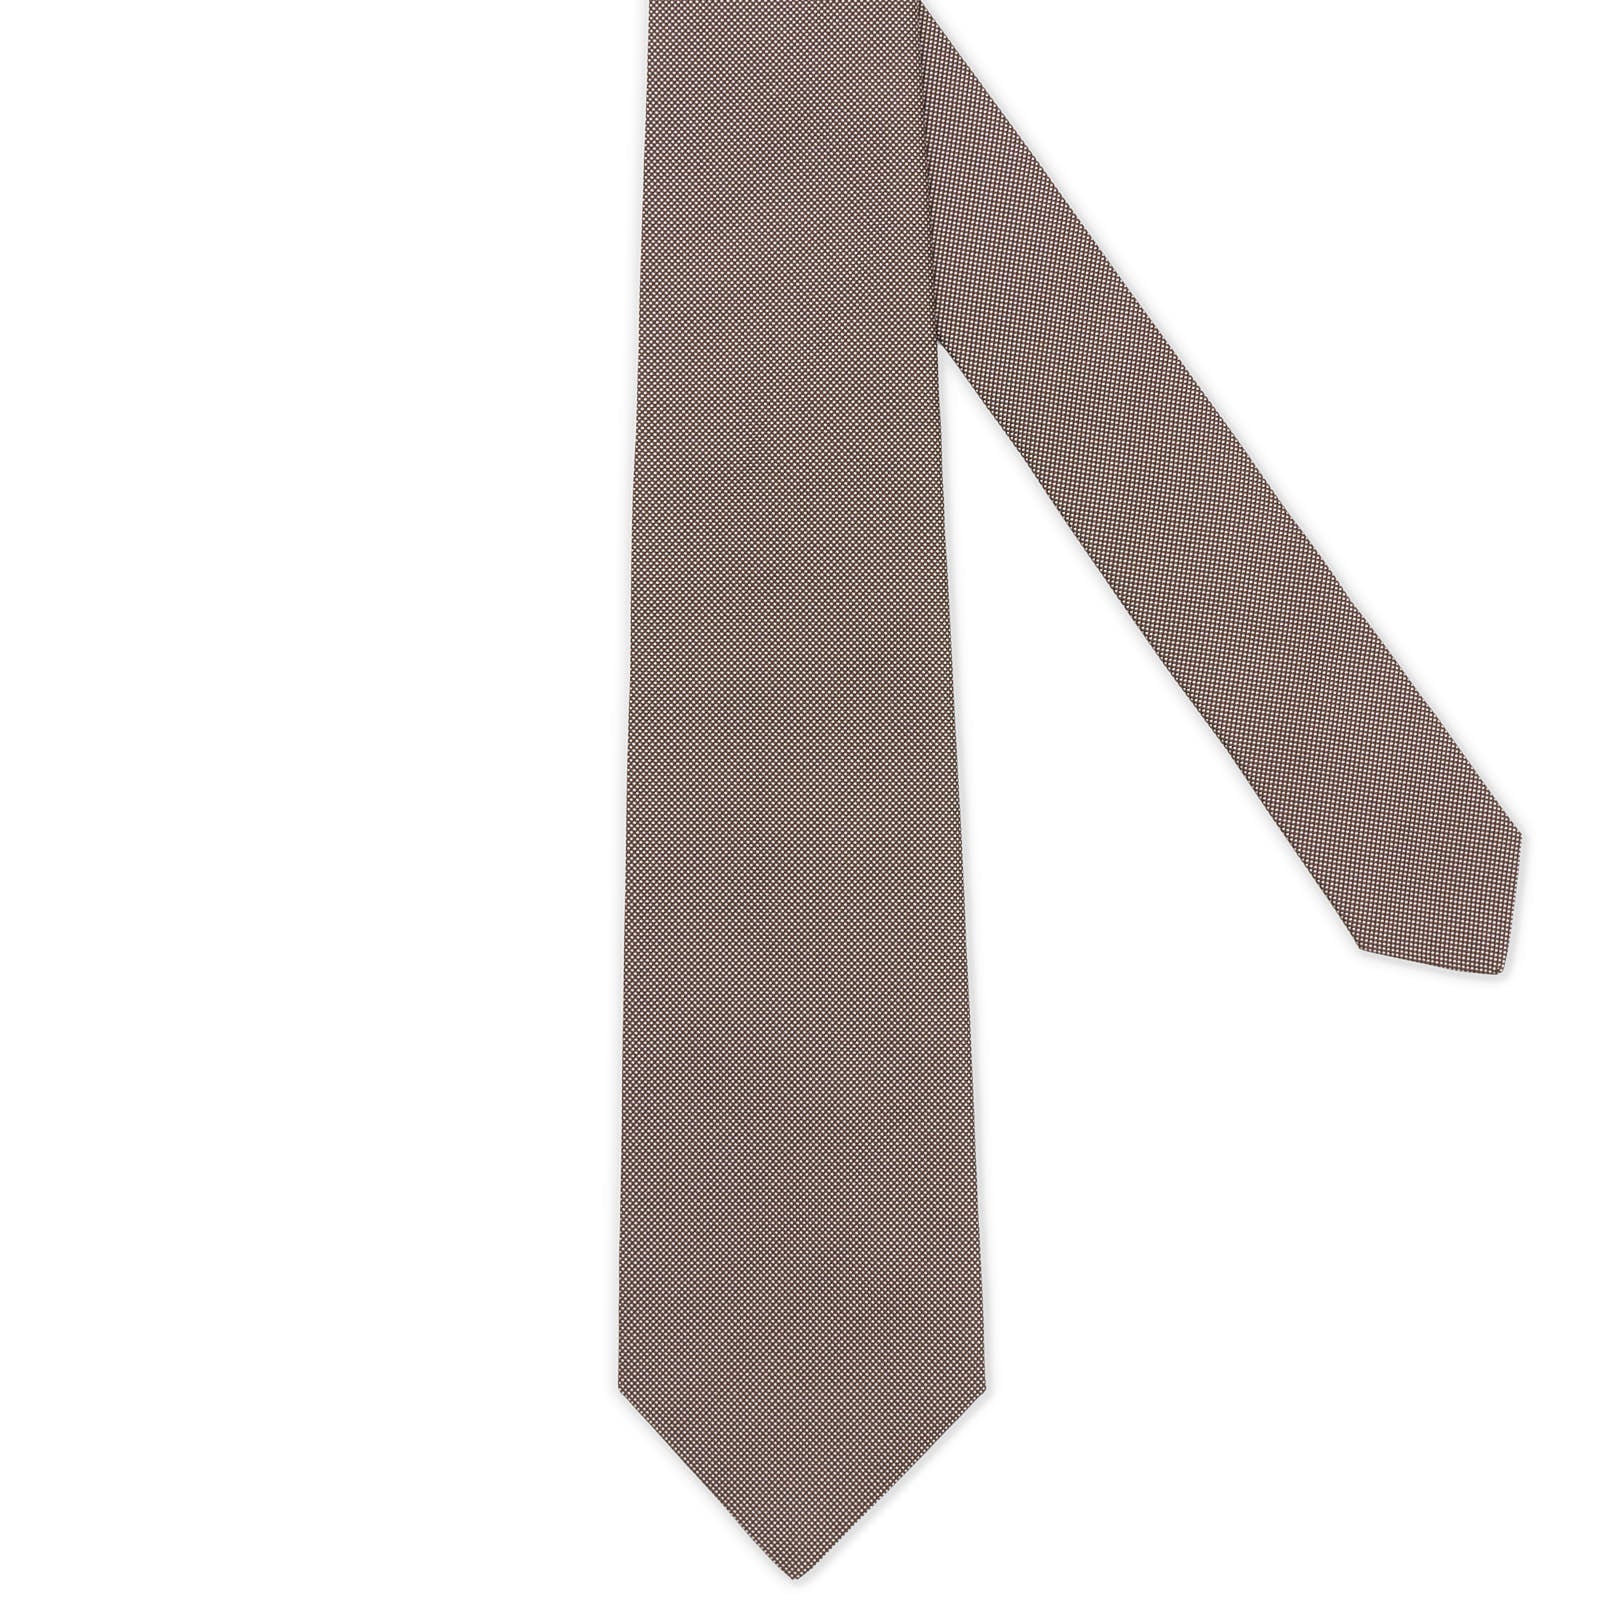 MATTABISCH of for VANNUCCI Brown and Gray Micro Seven Fold Silk Tie NEW